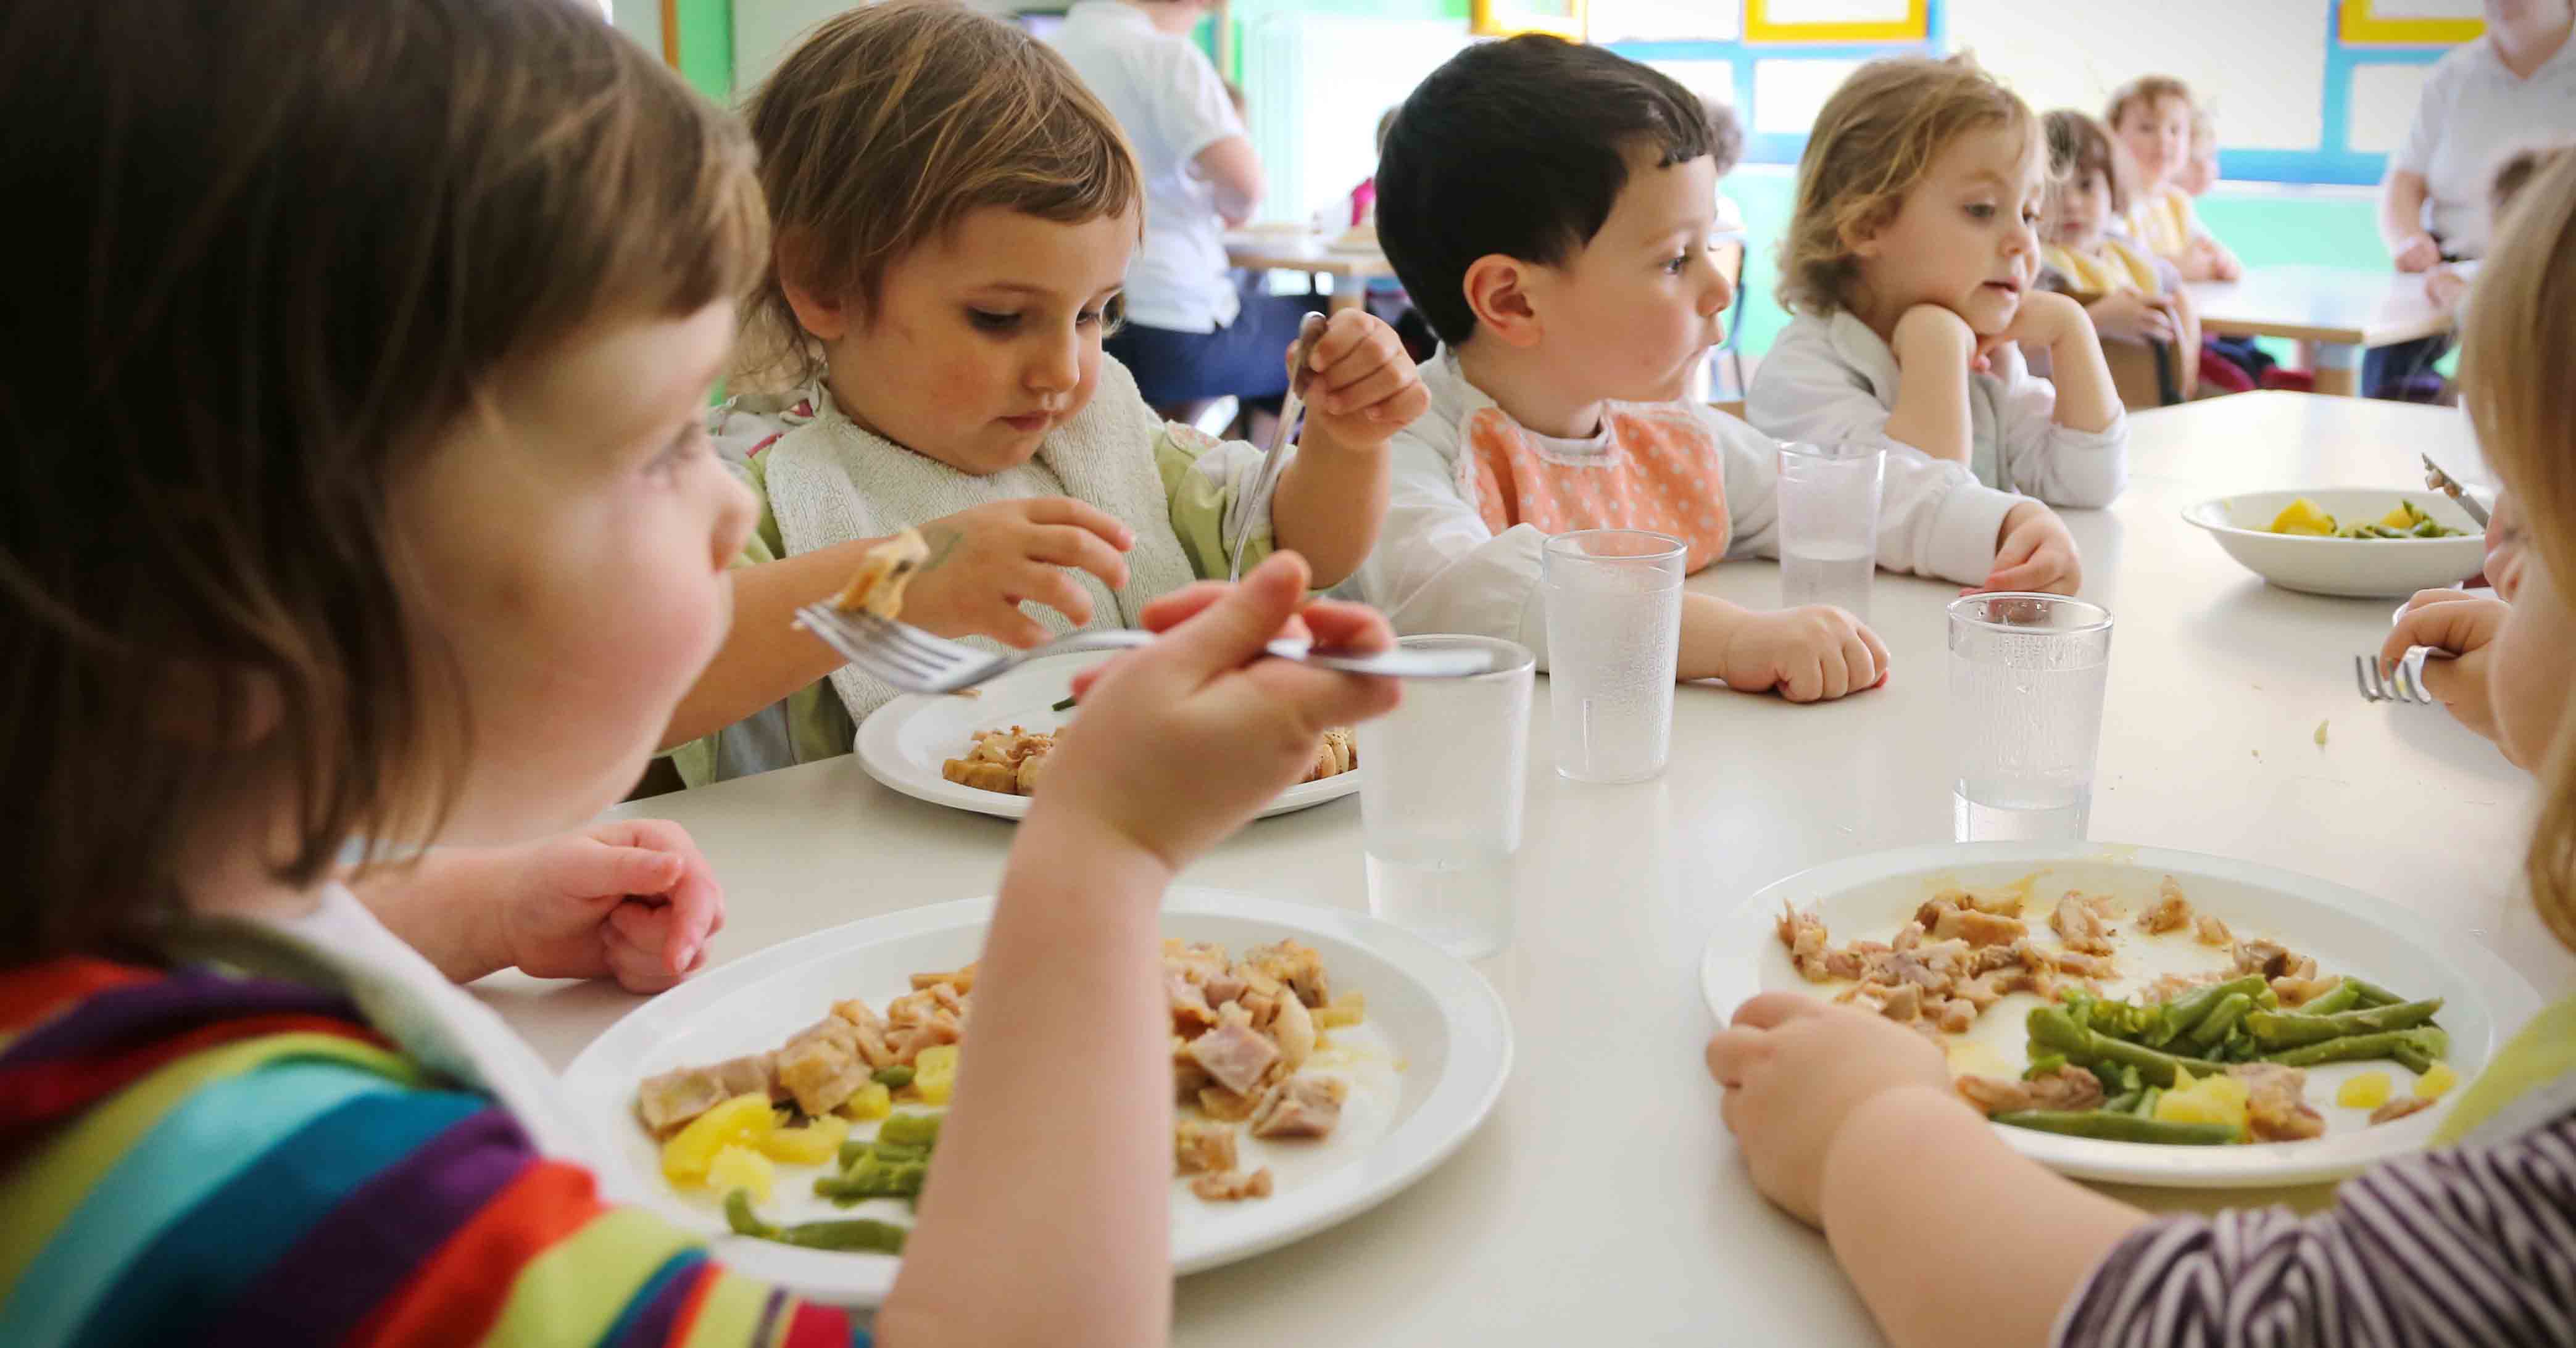 Pupils enjoying lunch at their school canteen